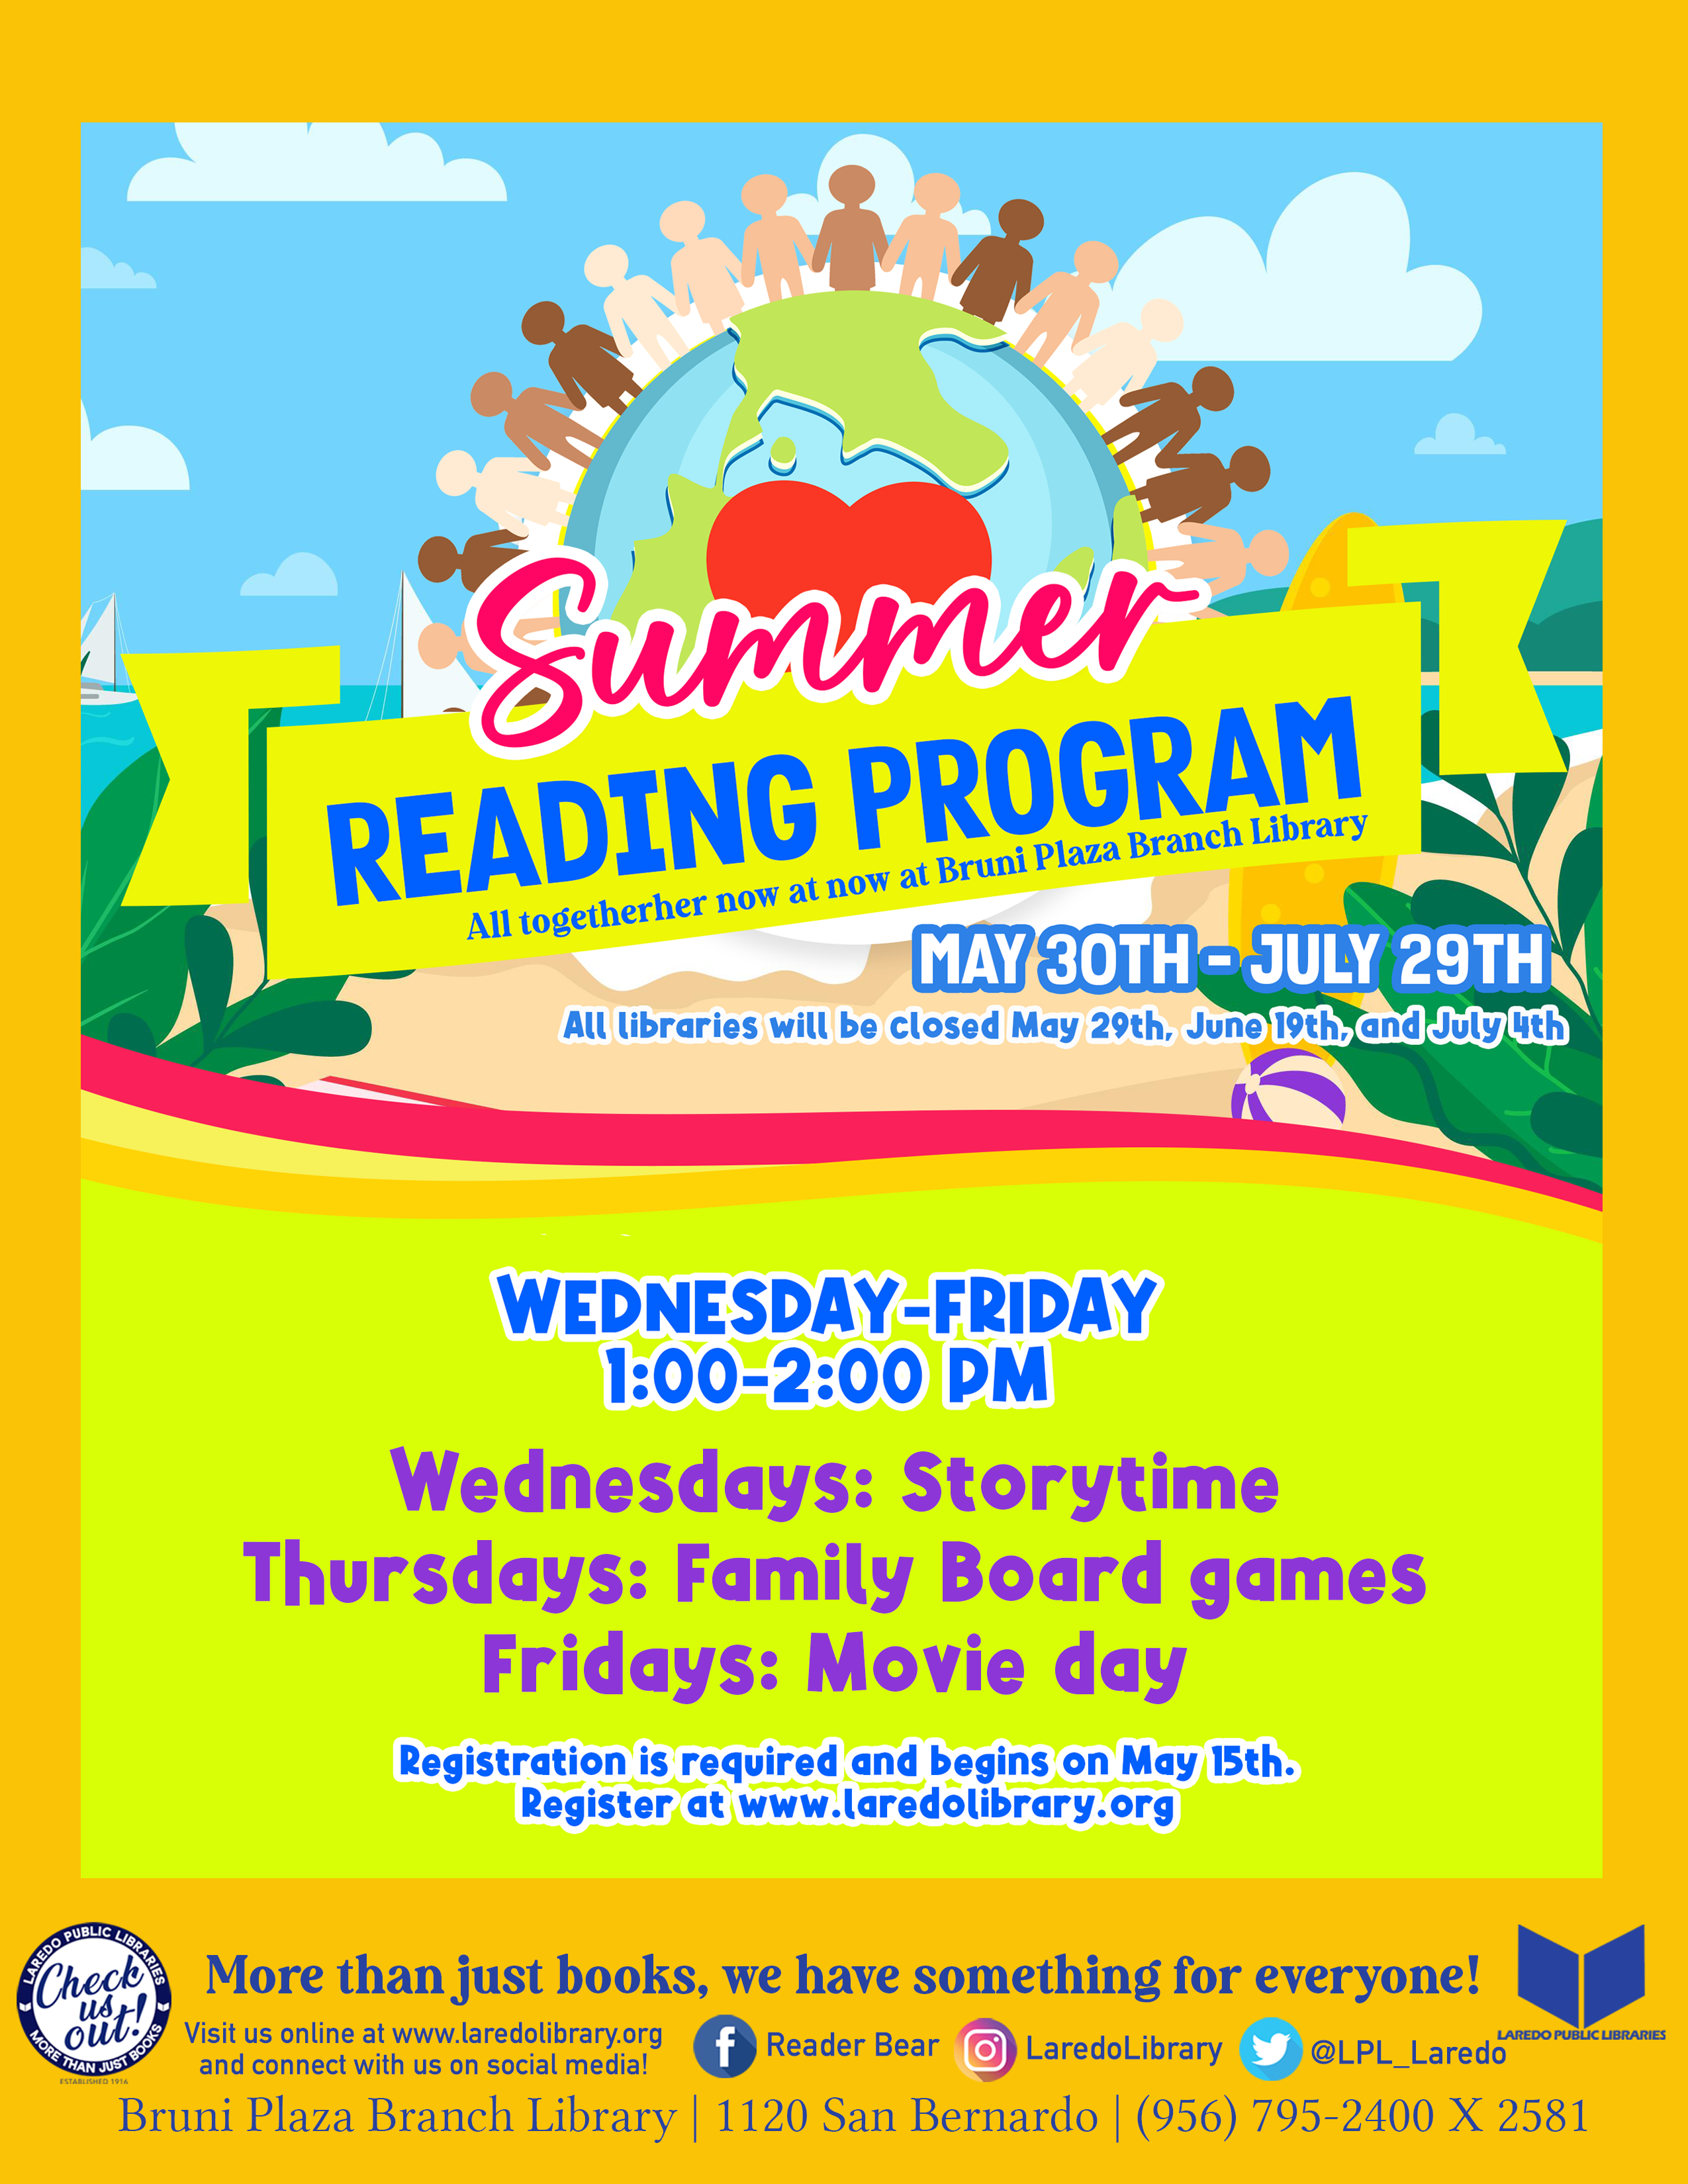 Summer Reading Program @Bruni Plaza Branch Library